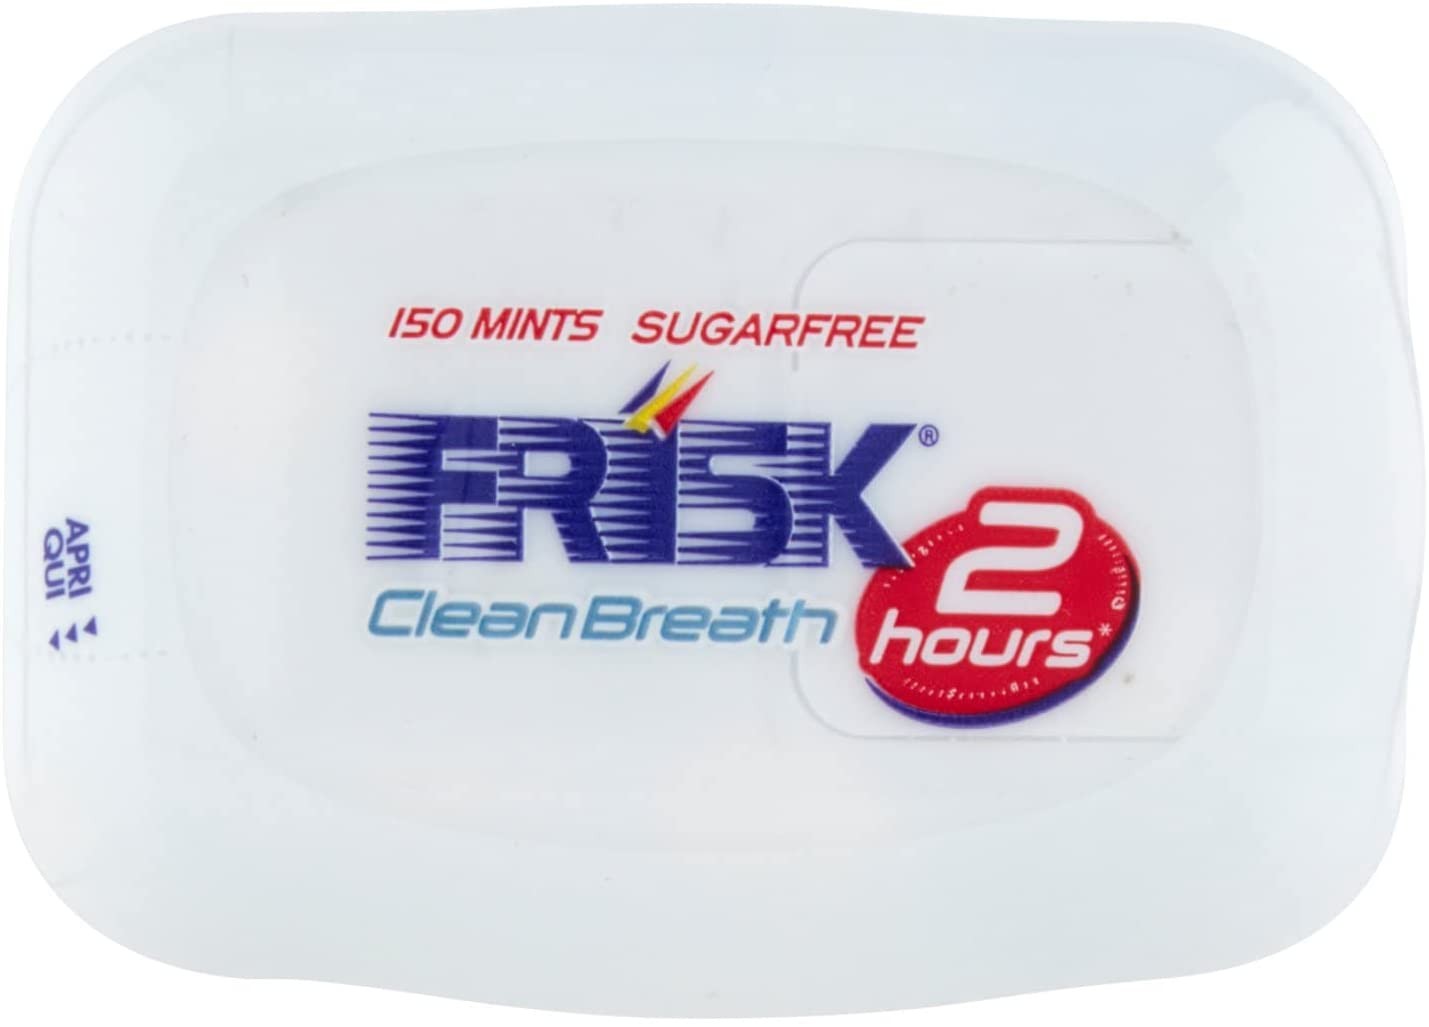 Frisk Clean Breath Caramelle al Gusto Peppermint, Mentine senza Zucchero e senza Glutine, 105g